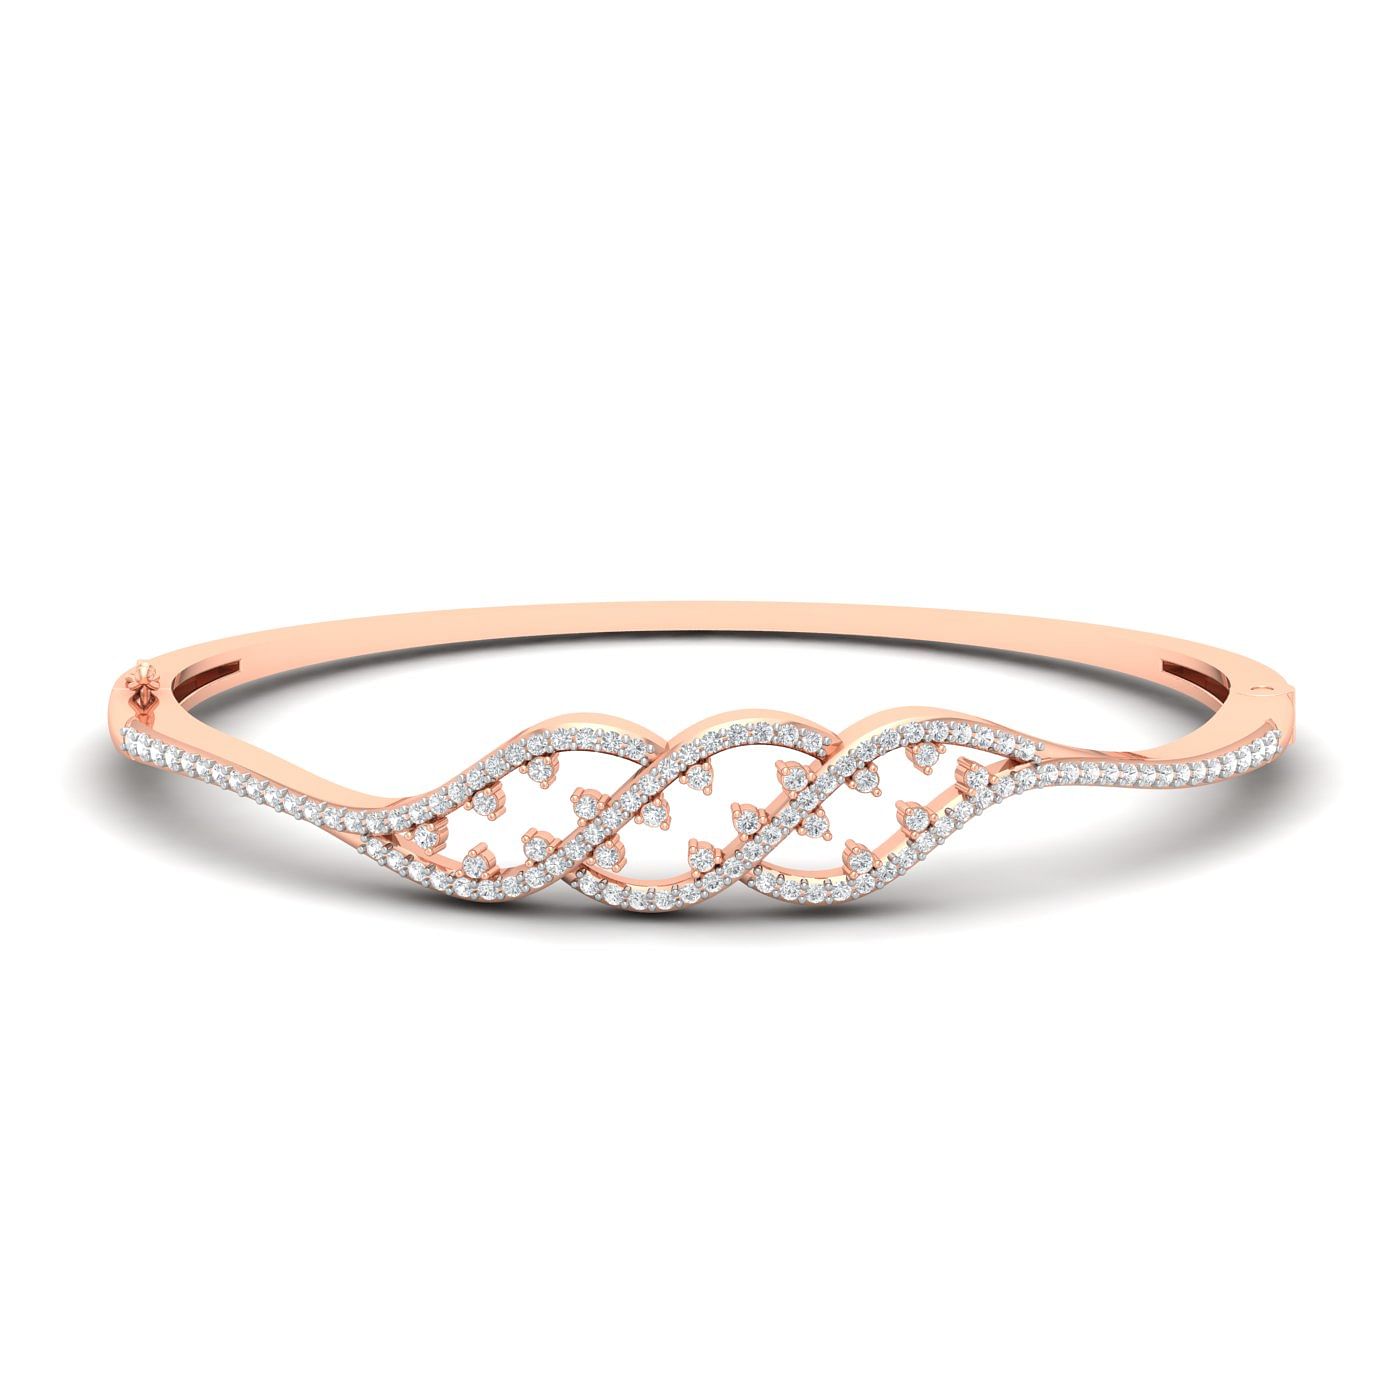 Designer engagement rose gold Kaylee Diamond Bracelet